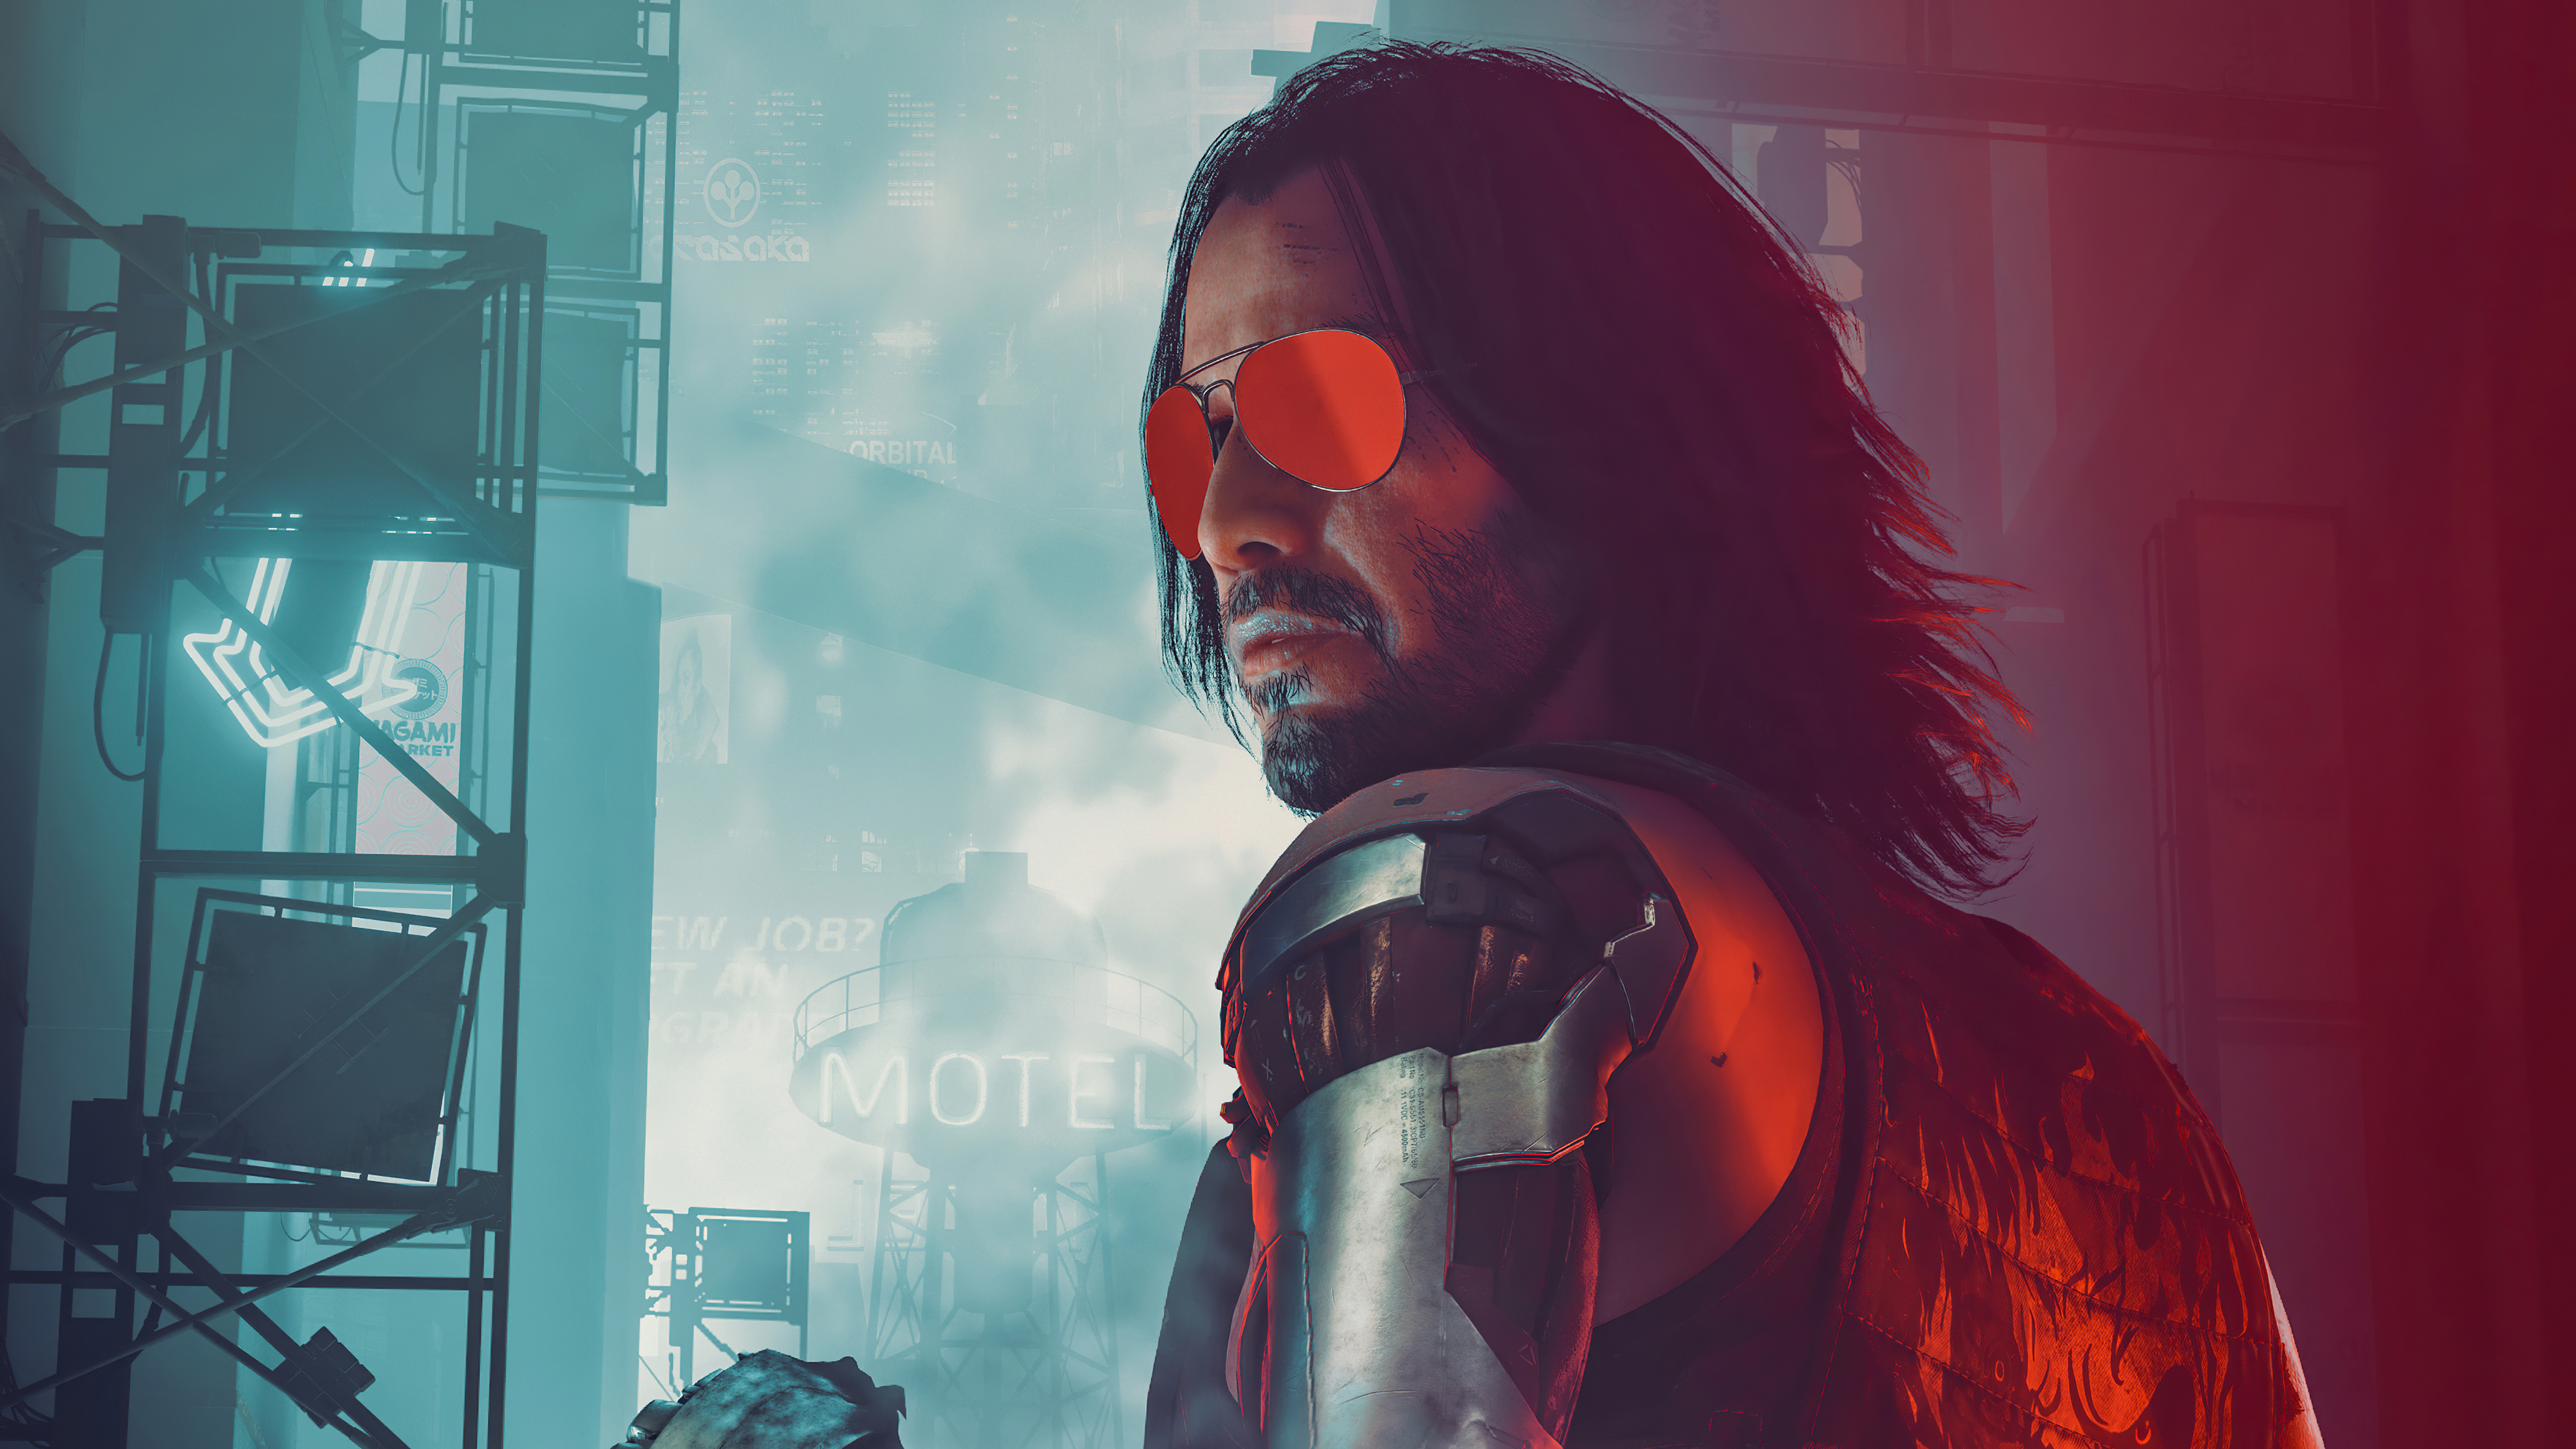 Cyberpunk Cyberpunk 2077 Cyberpunk Samurai Johnny Silverhand Keanu Reeves 4K 5120x2880